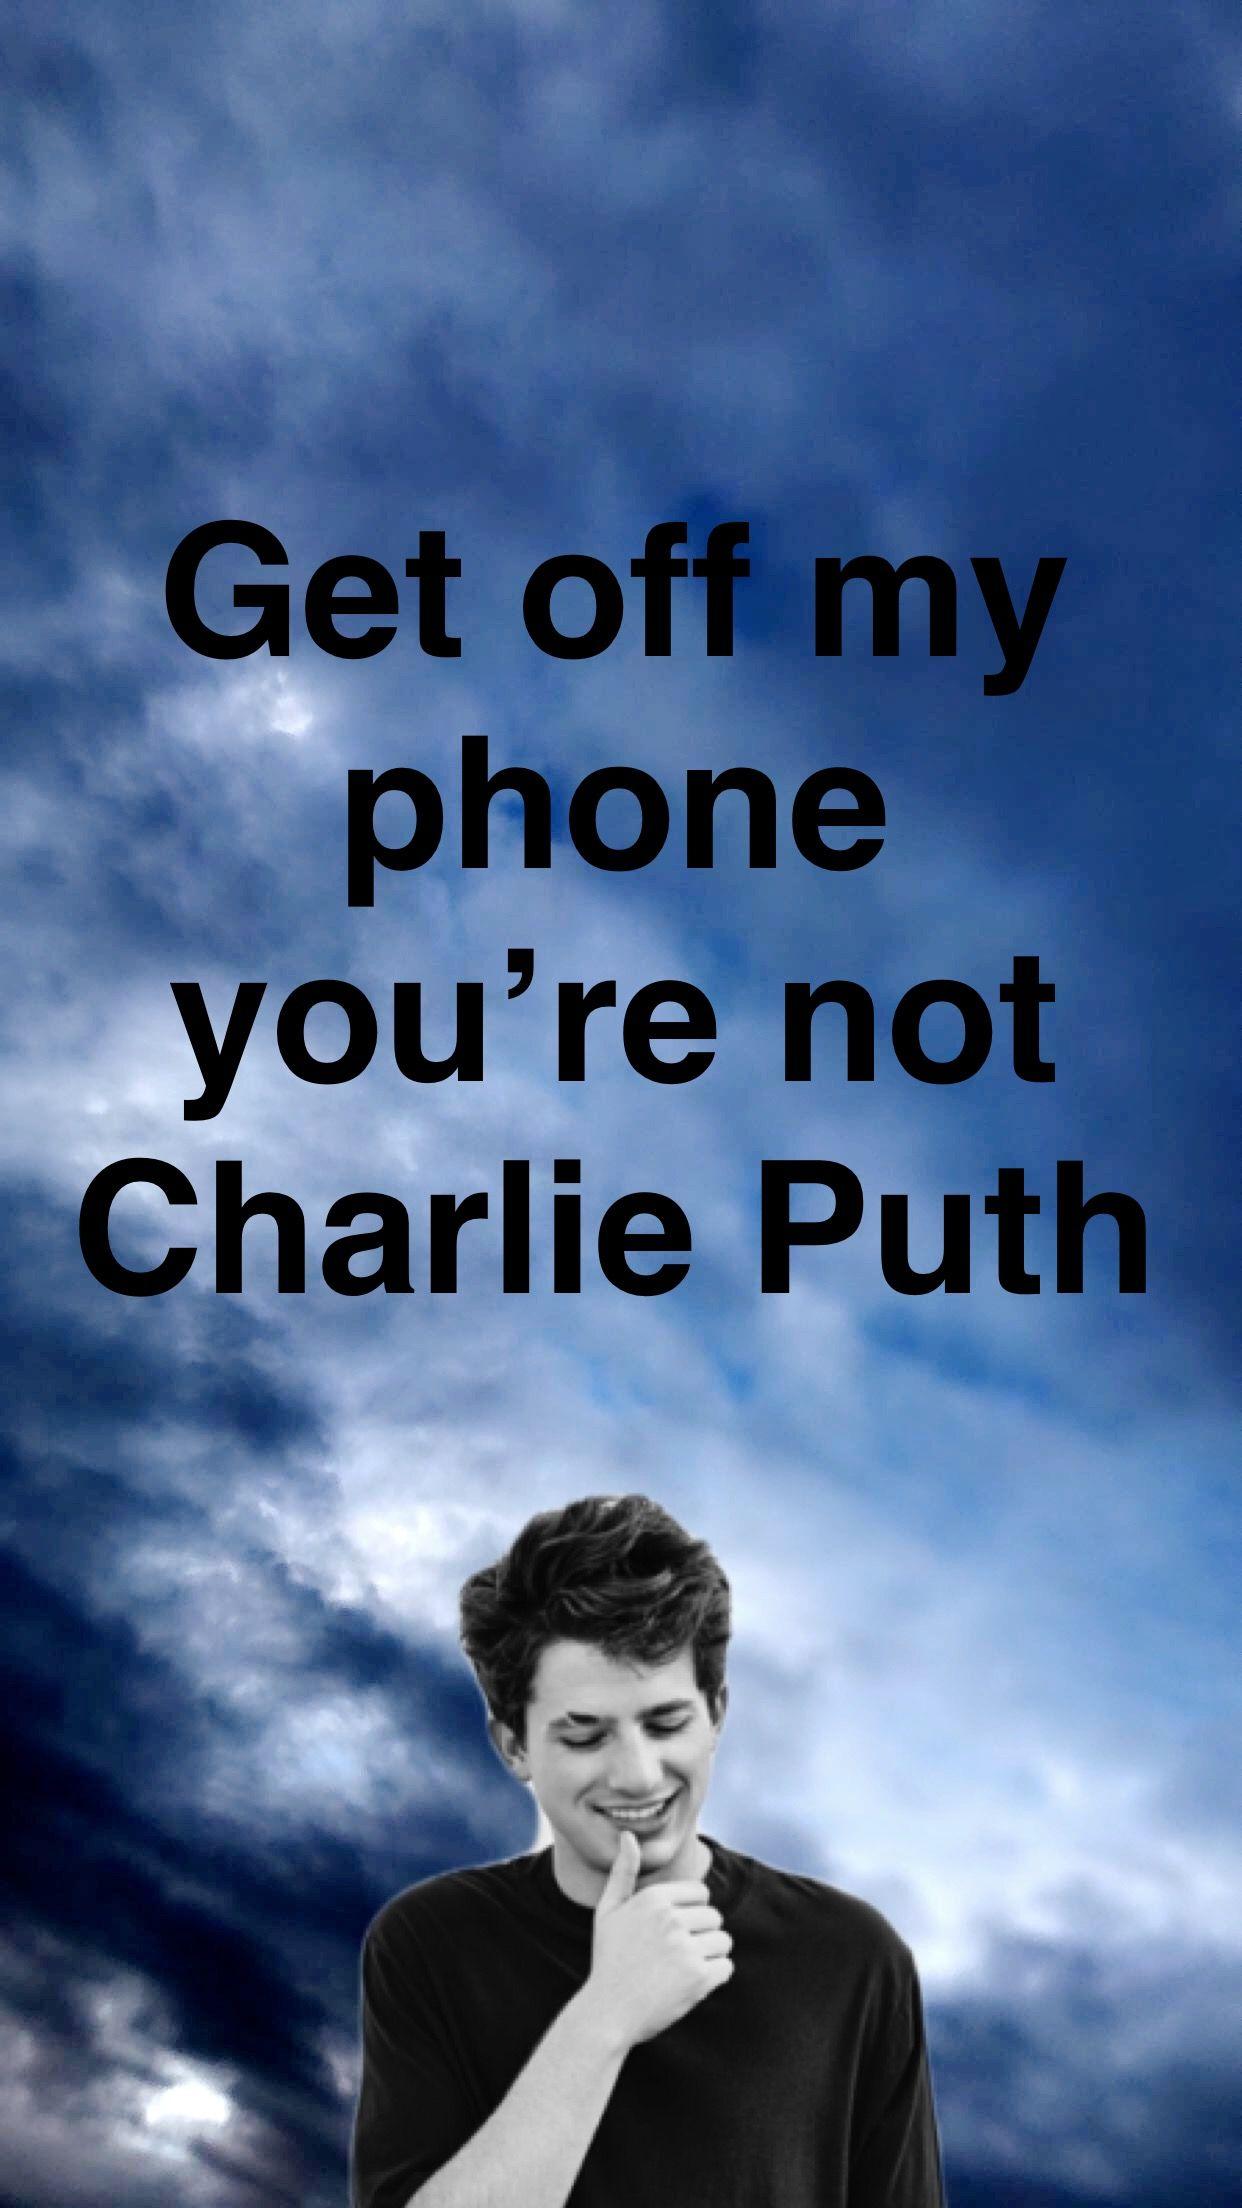 Charlie puth phone wallpaper. iPhone wallpaper